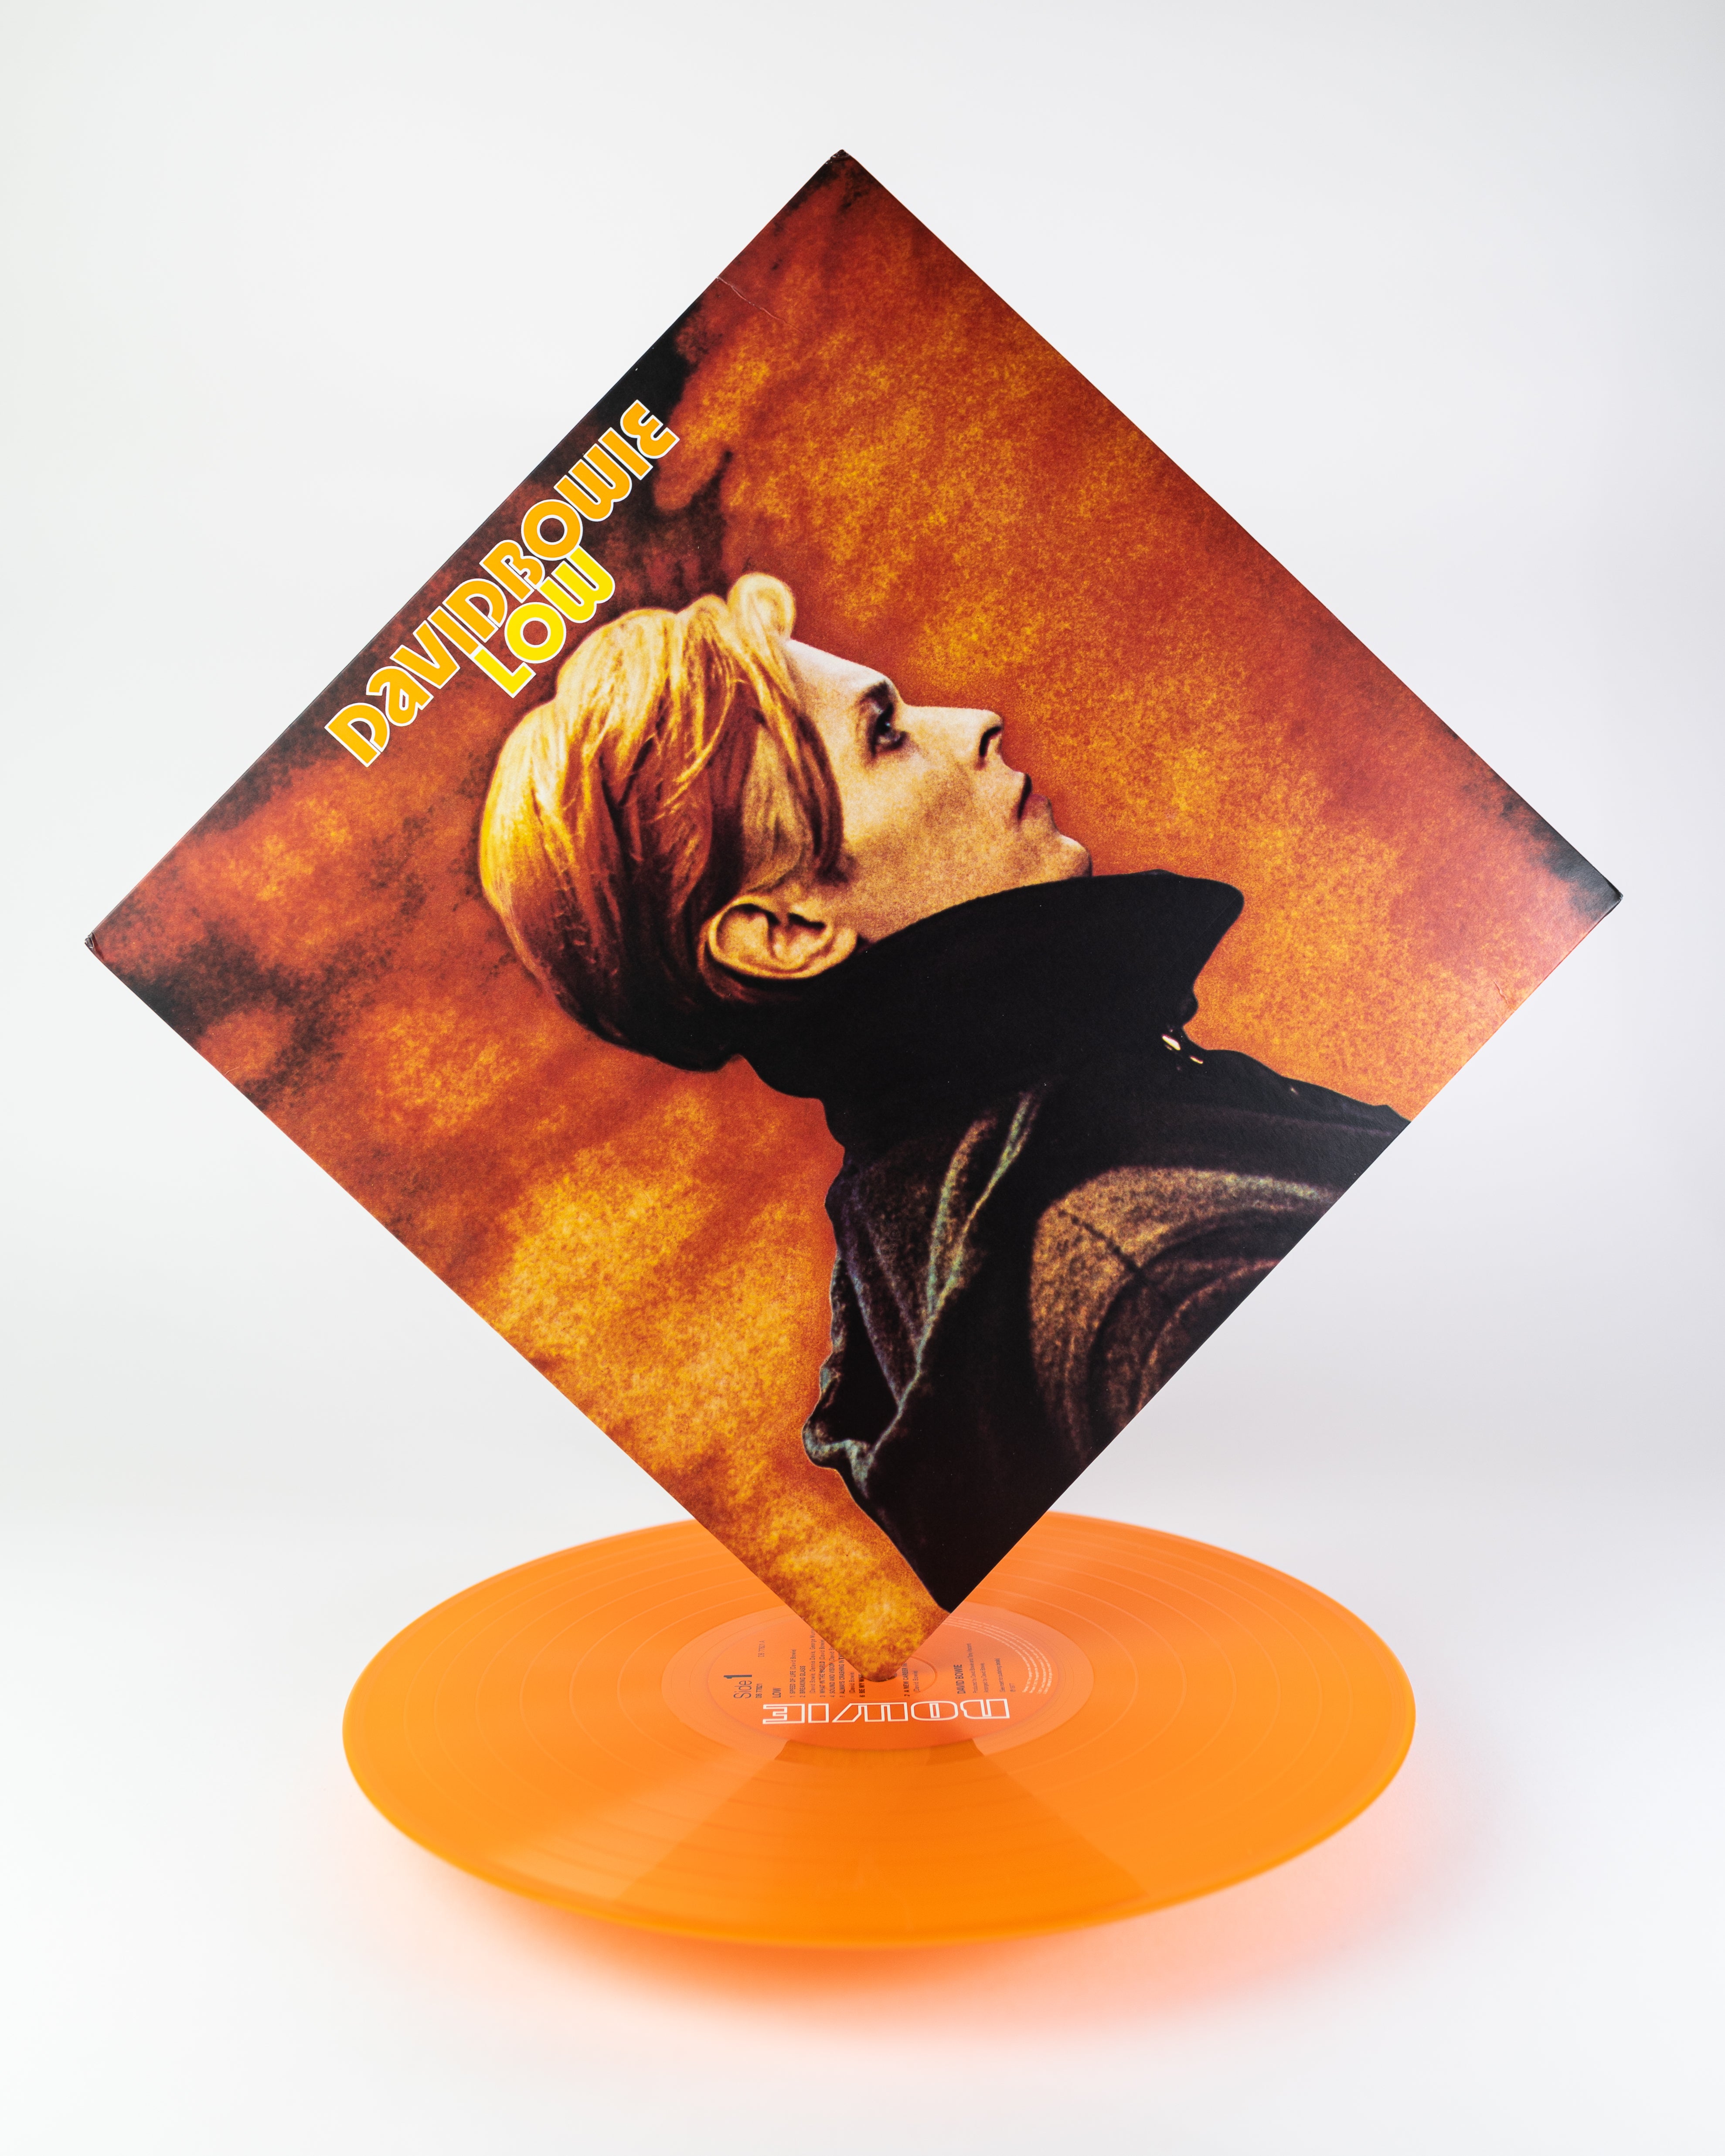 David Bowie - Low [Orange Vinyl]